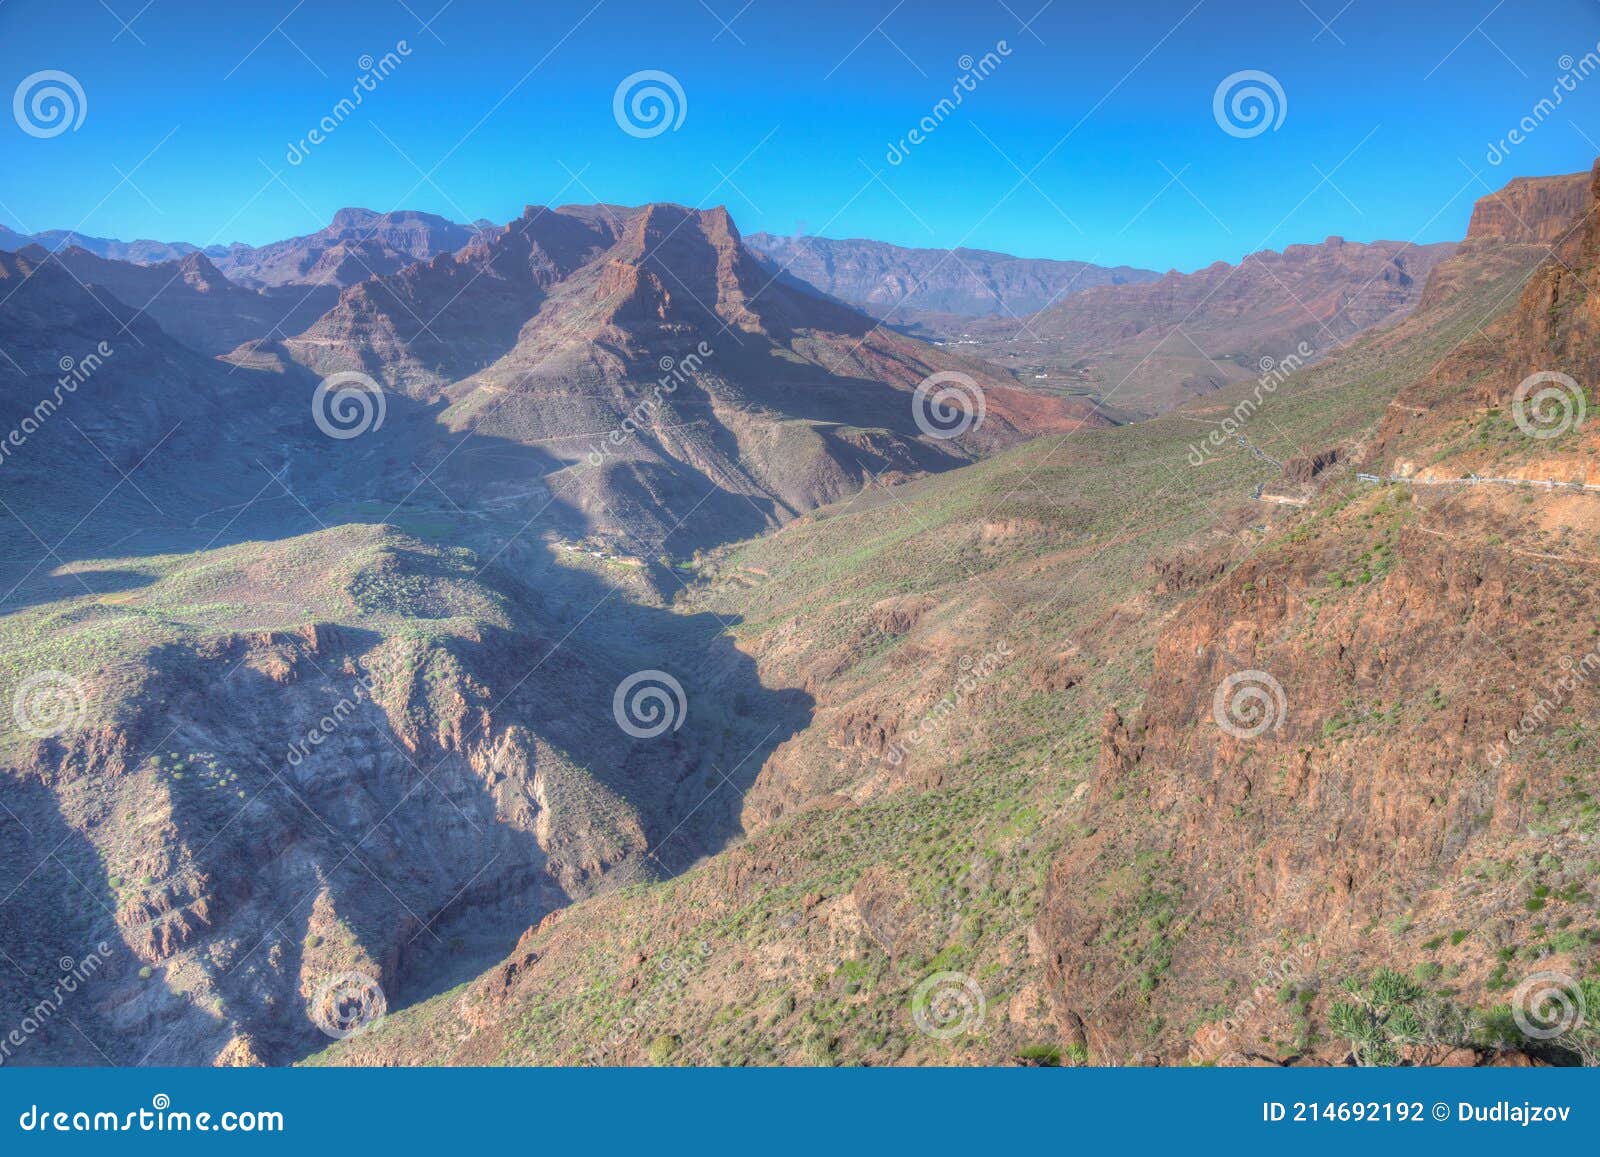 degollada de la yegua viewpoint at gran canaria, canary islands, spain